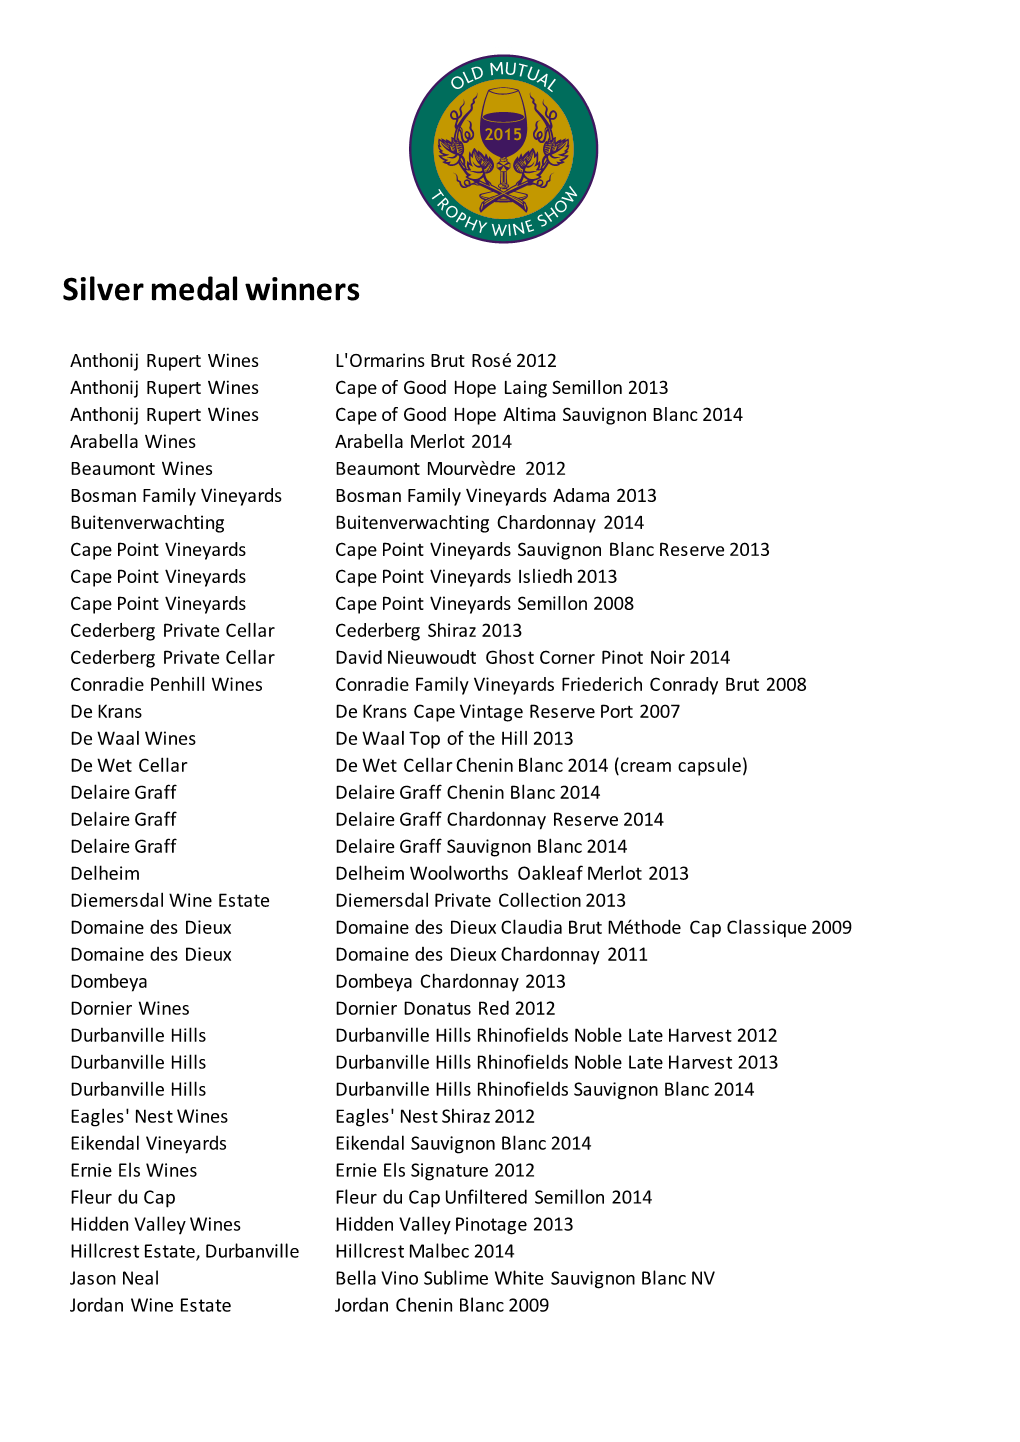 Silver Medal Winners